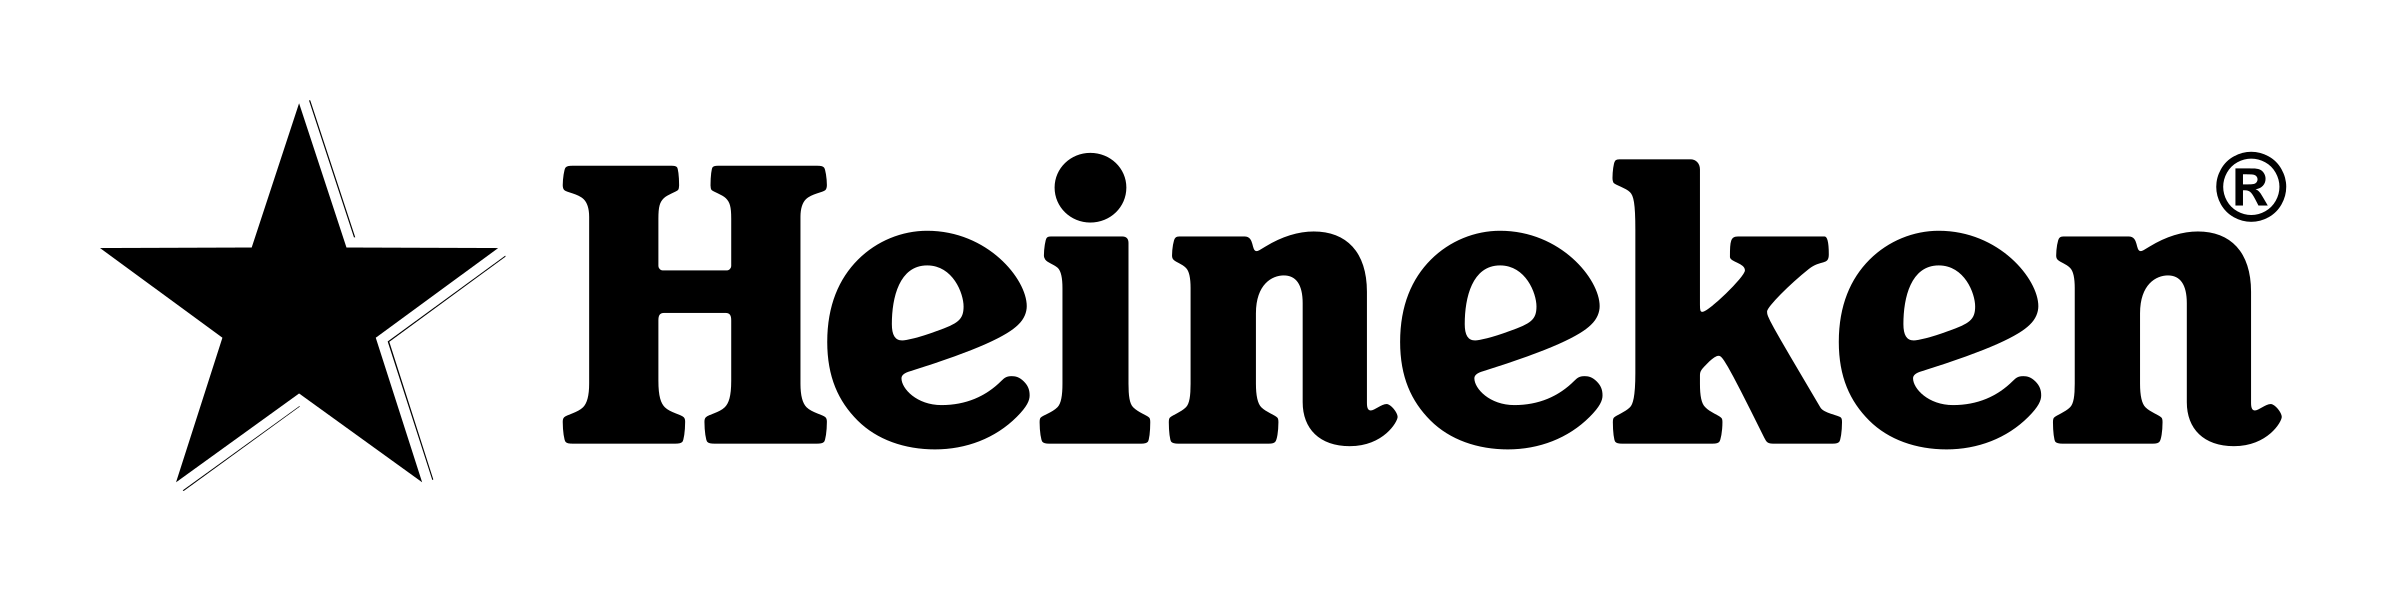 heineken-logo-black-and-white.png